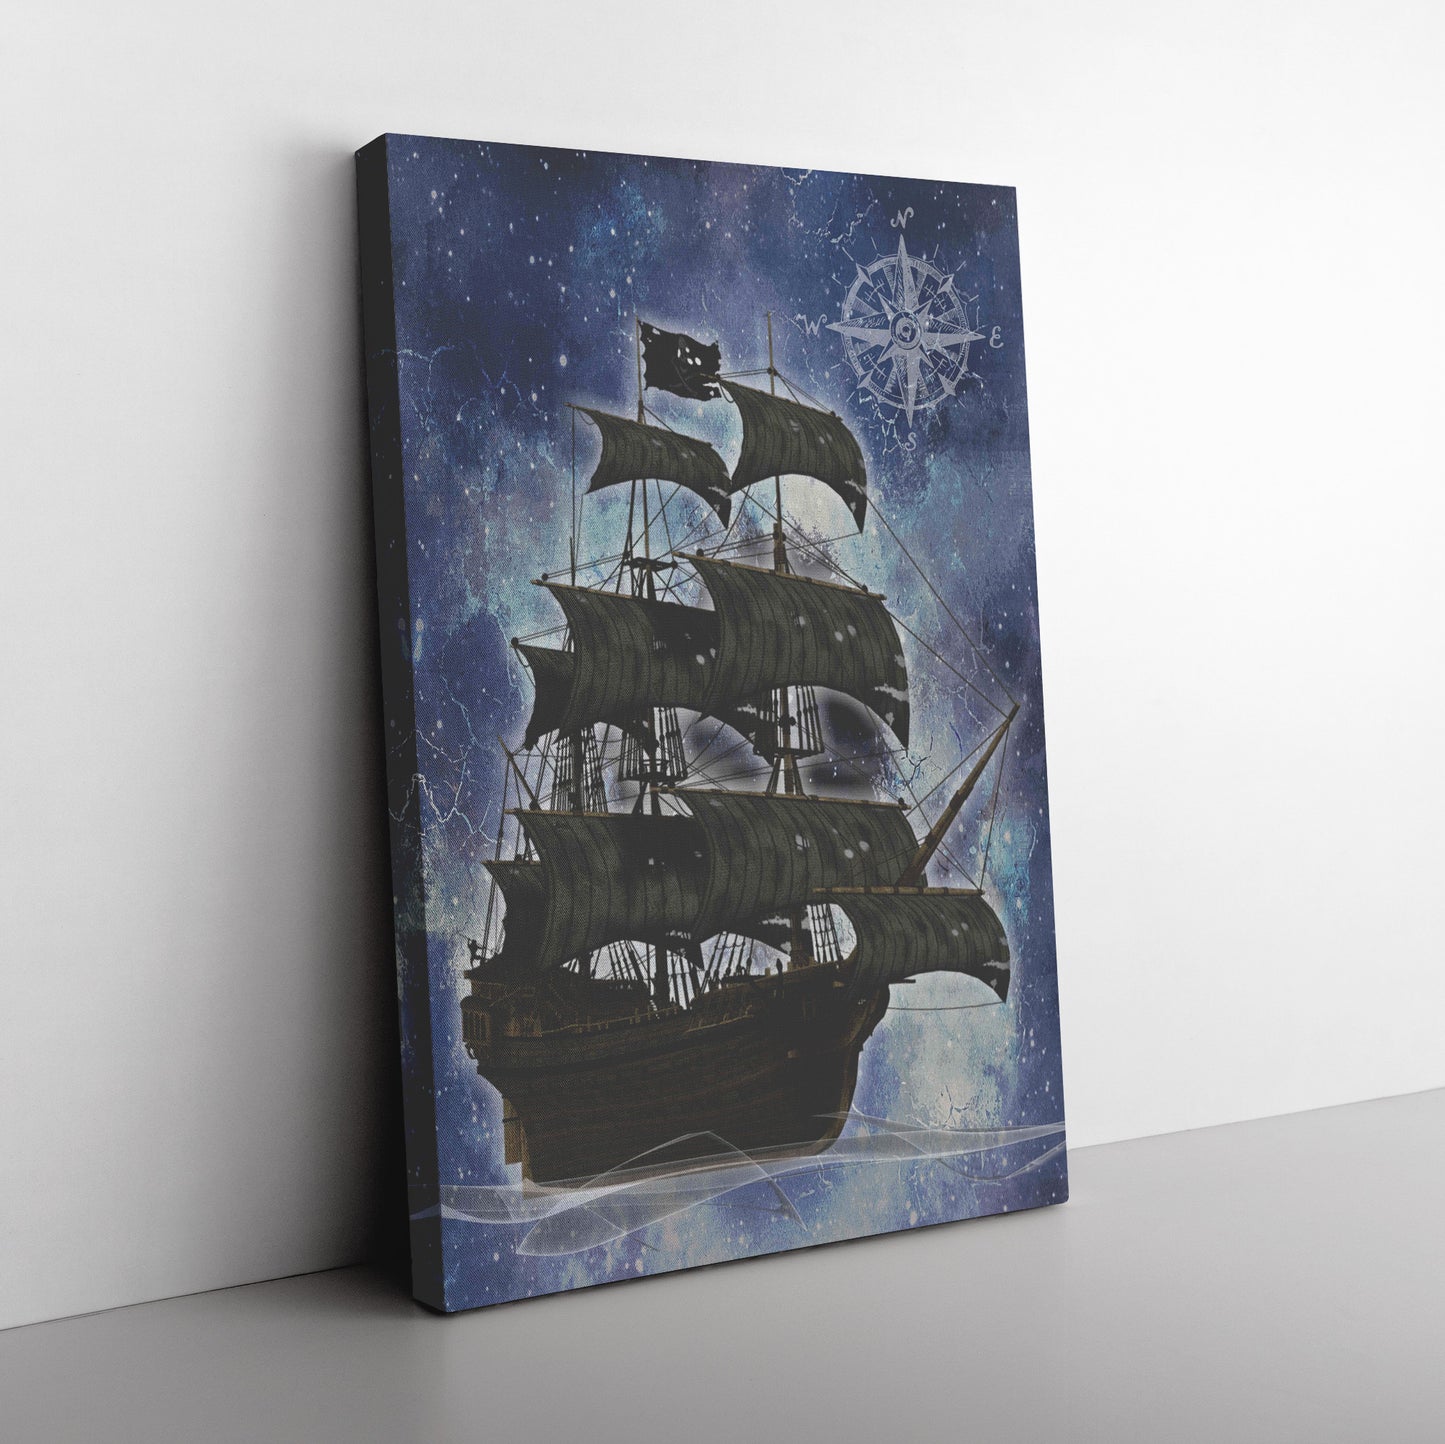 Pirate Ghost Ship Canvas Print - Blue-White